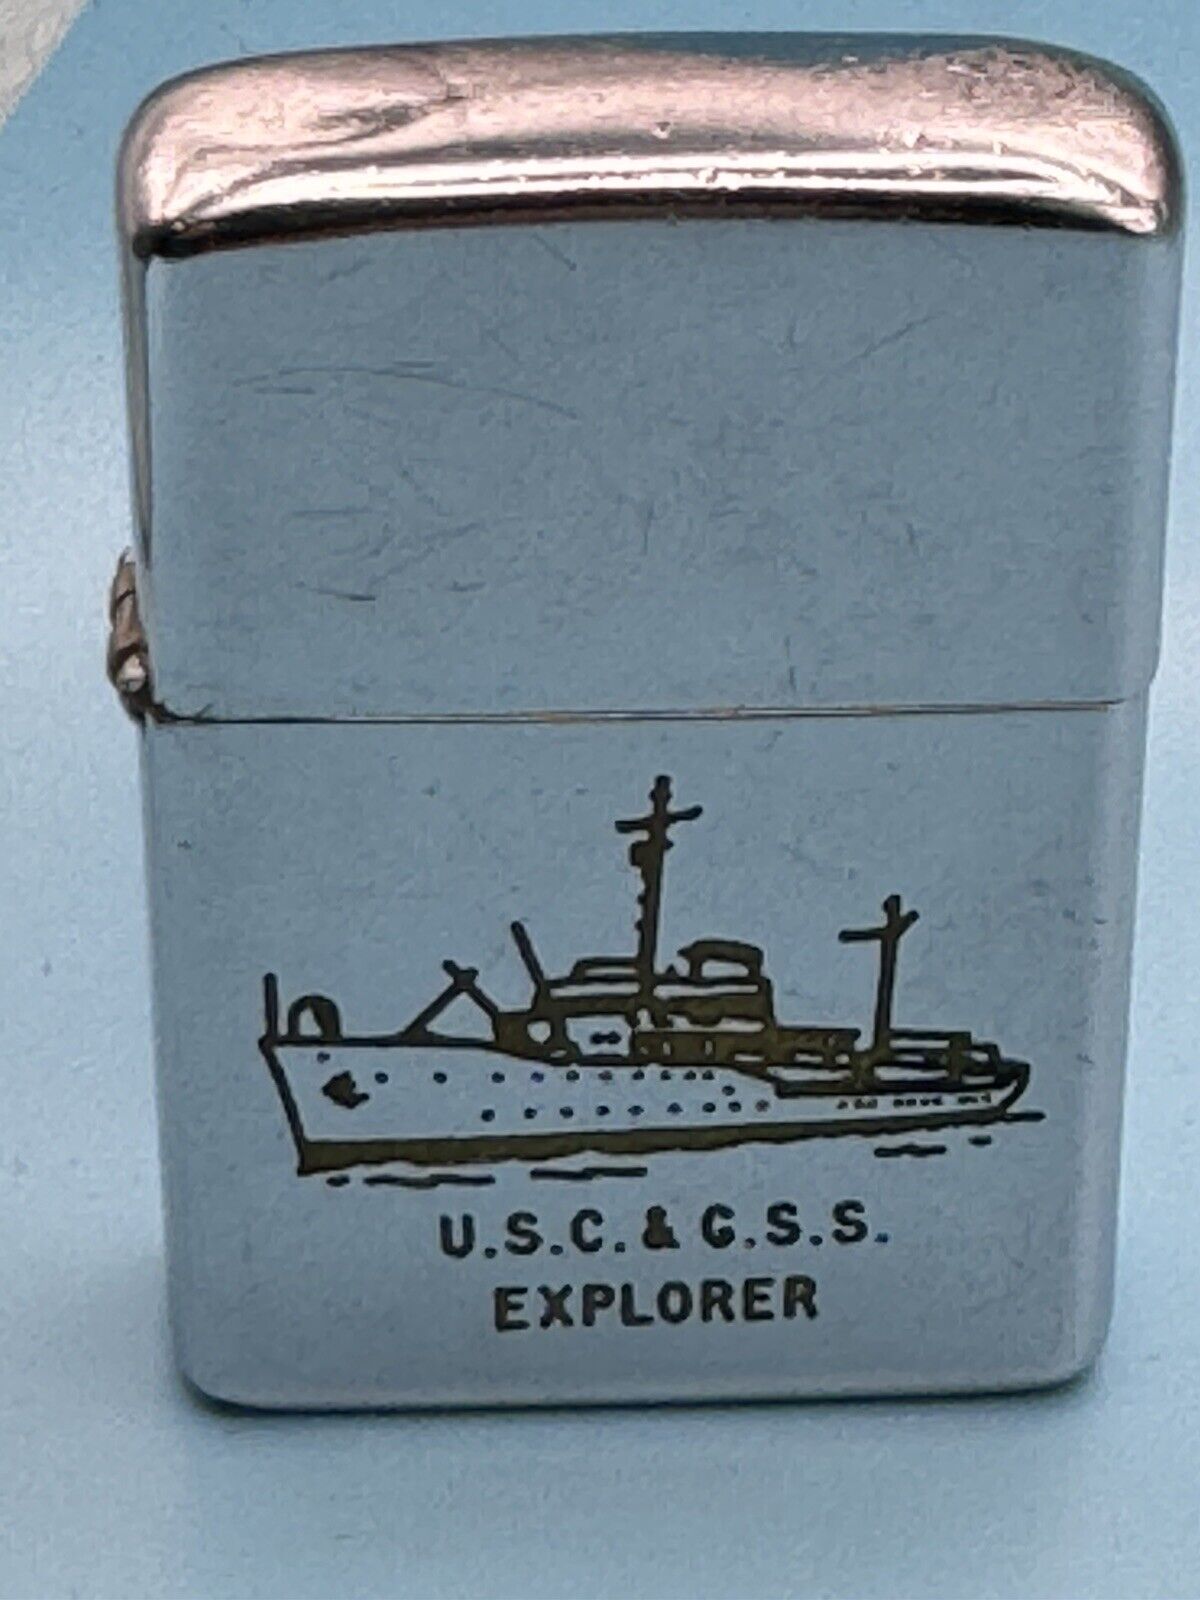 Vintage 1958 USC & GSS Explorer Military Ship Chrome Zippo Lighter